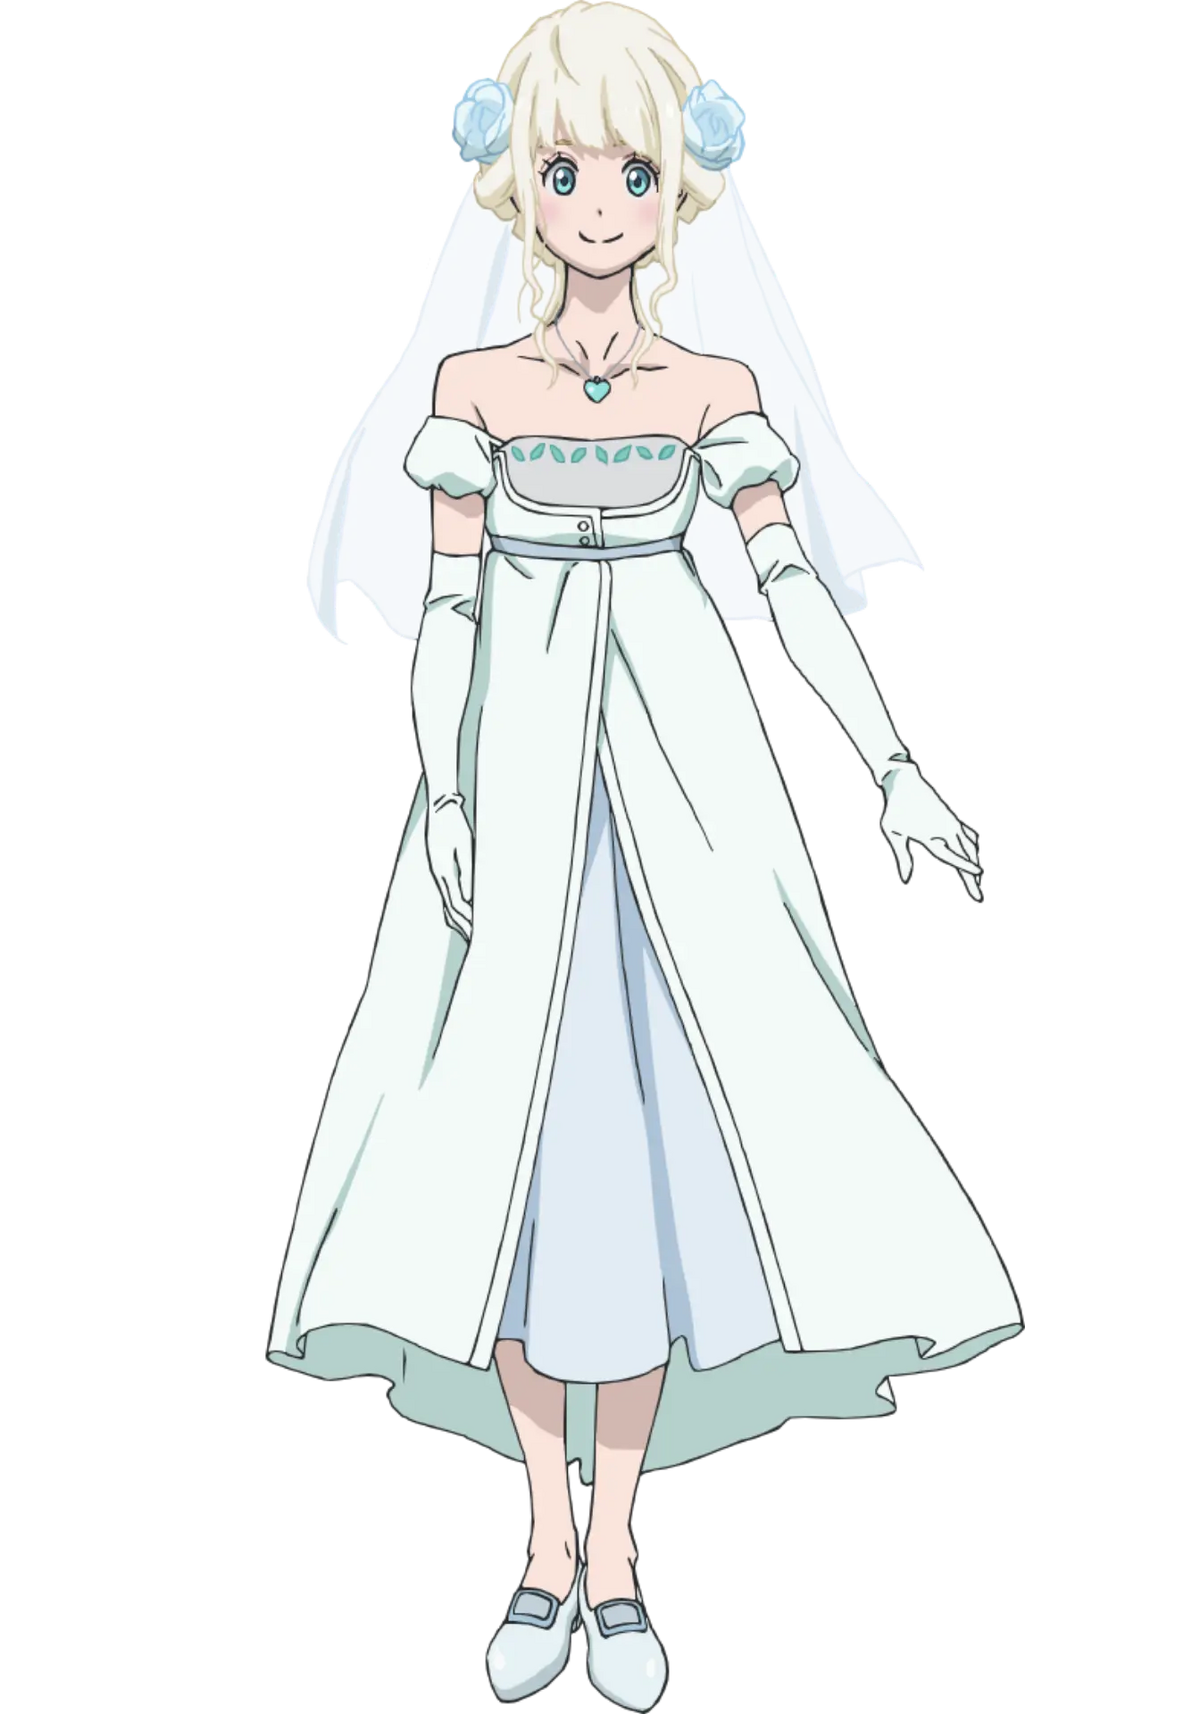 Fena: Pirate Princess - Wikipedia